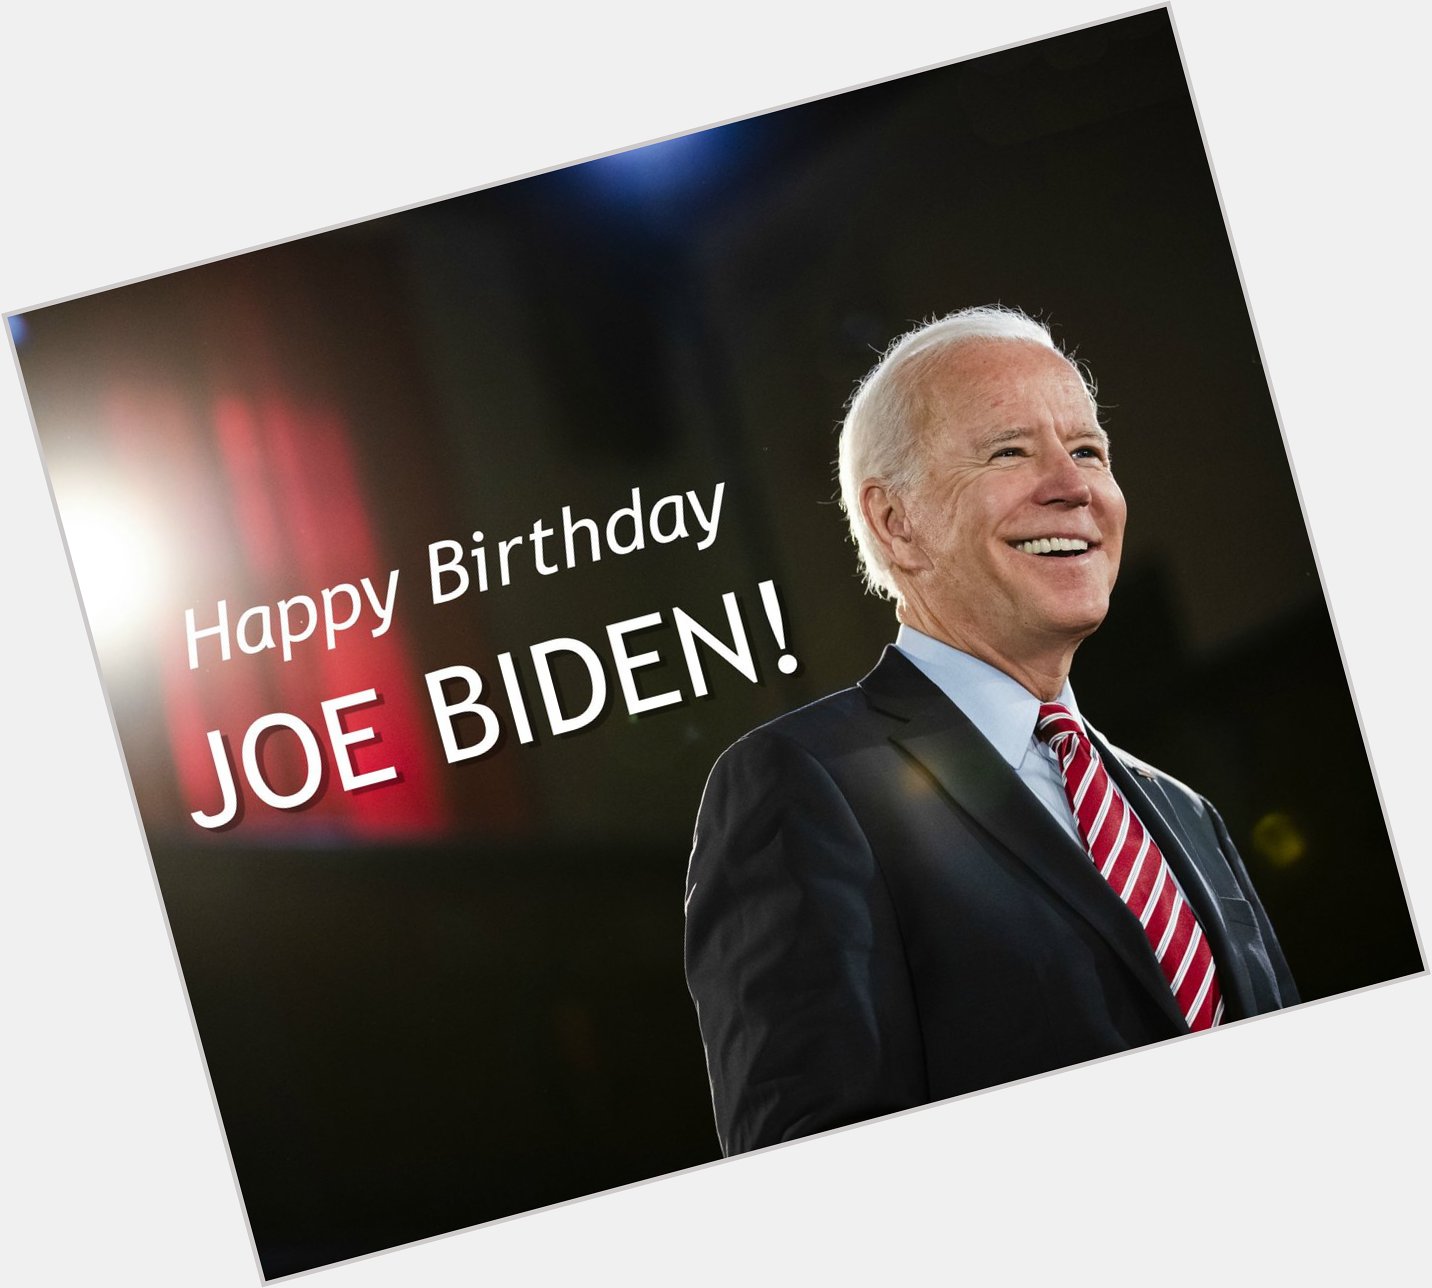 HAPPY BIRTHDAY, JOE BIDEN! The former vice president turns 77 today.  